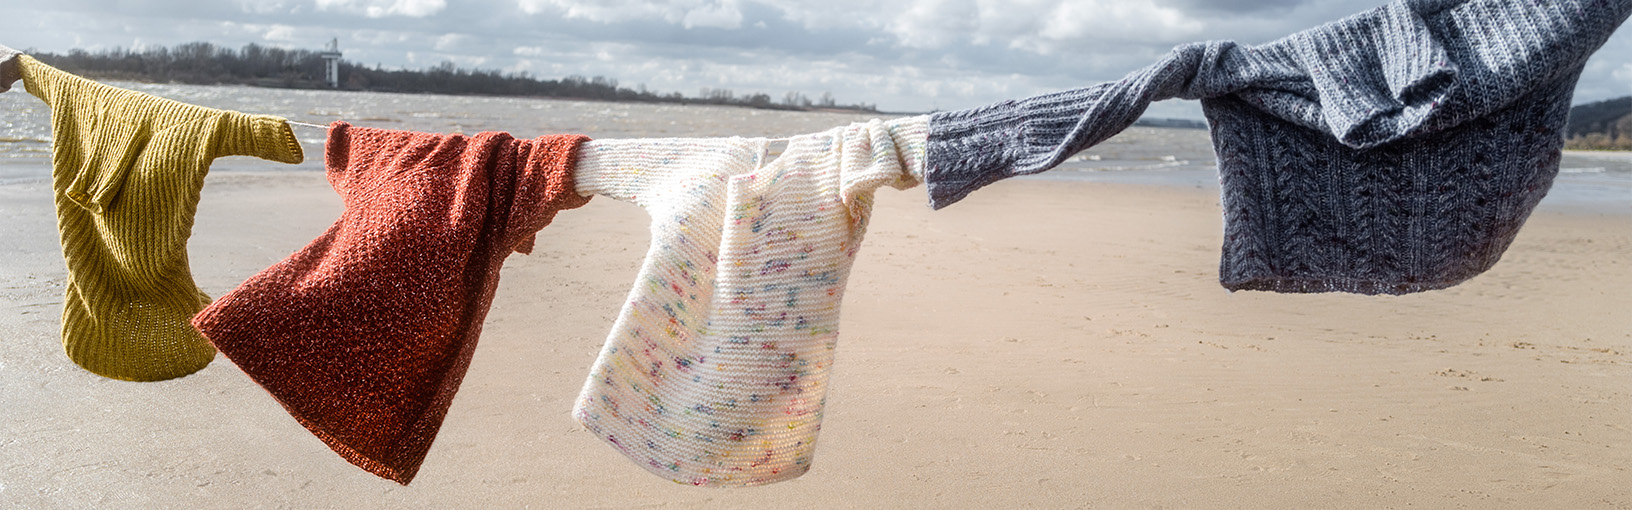 High quality yarns for knitting, crocheting & felting Lana Grossa Yarns | New releases